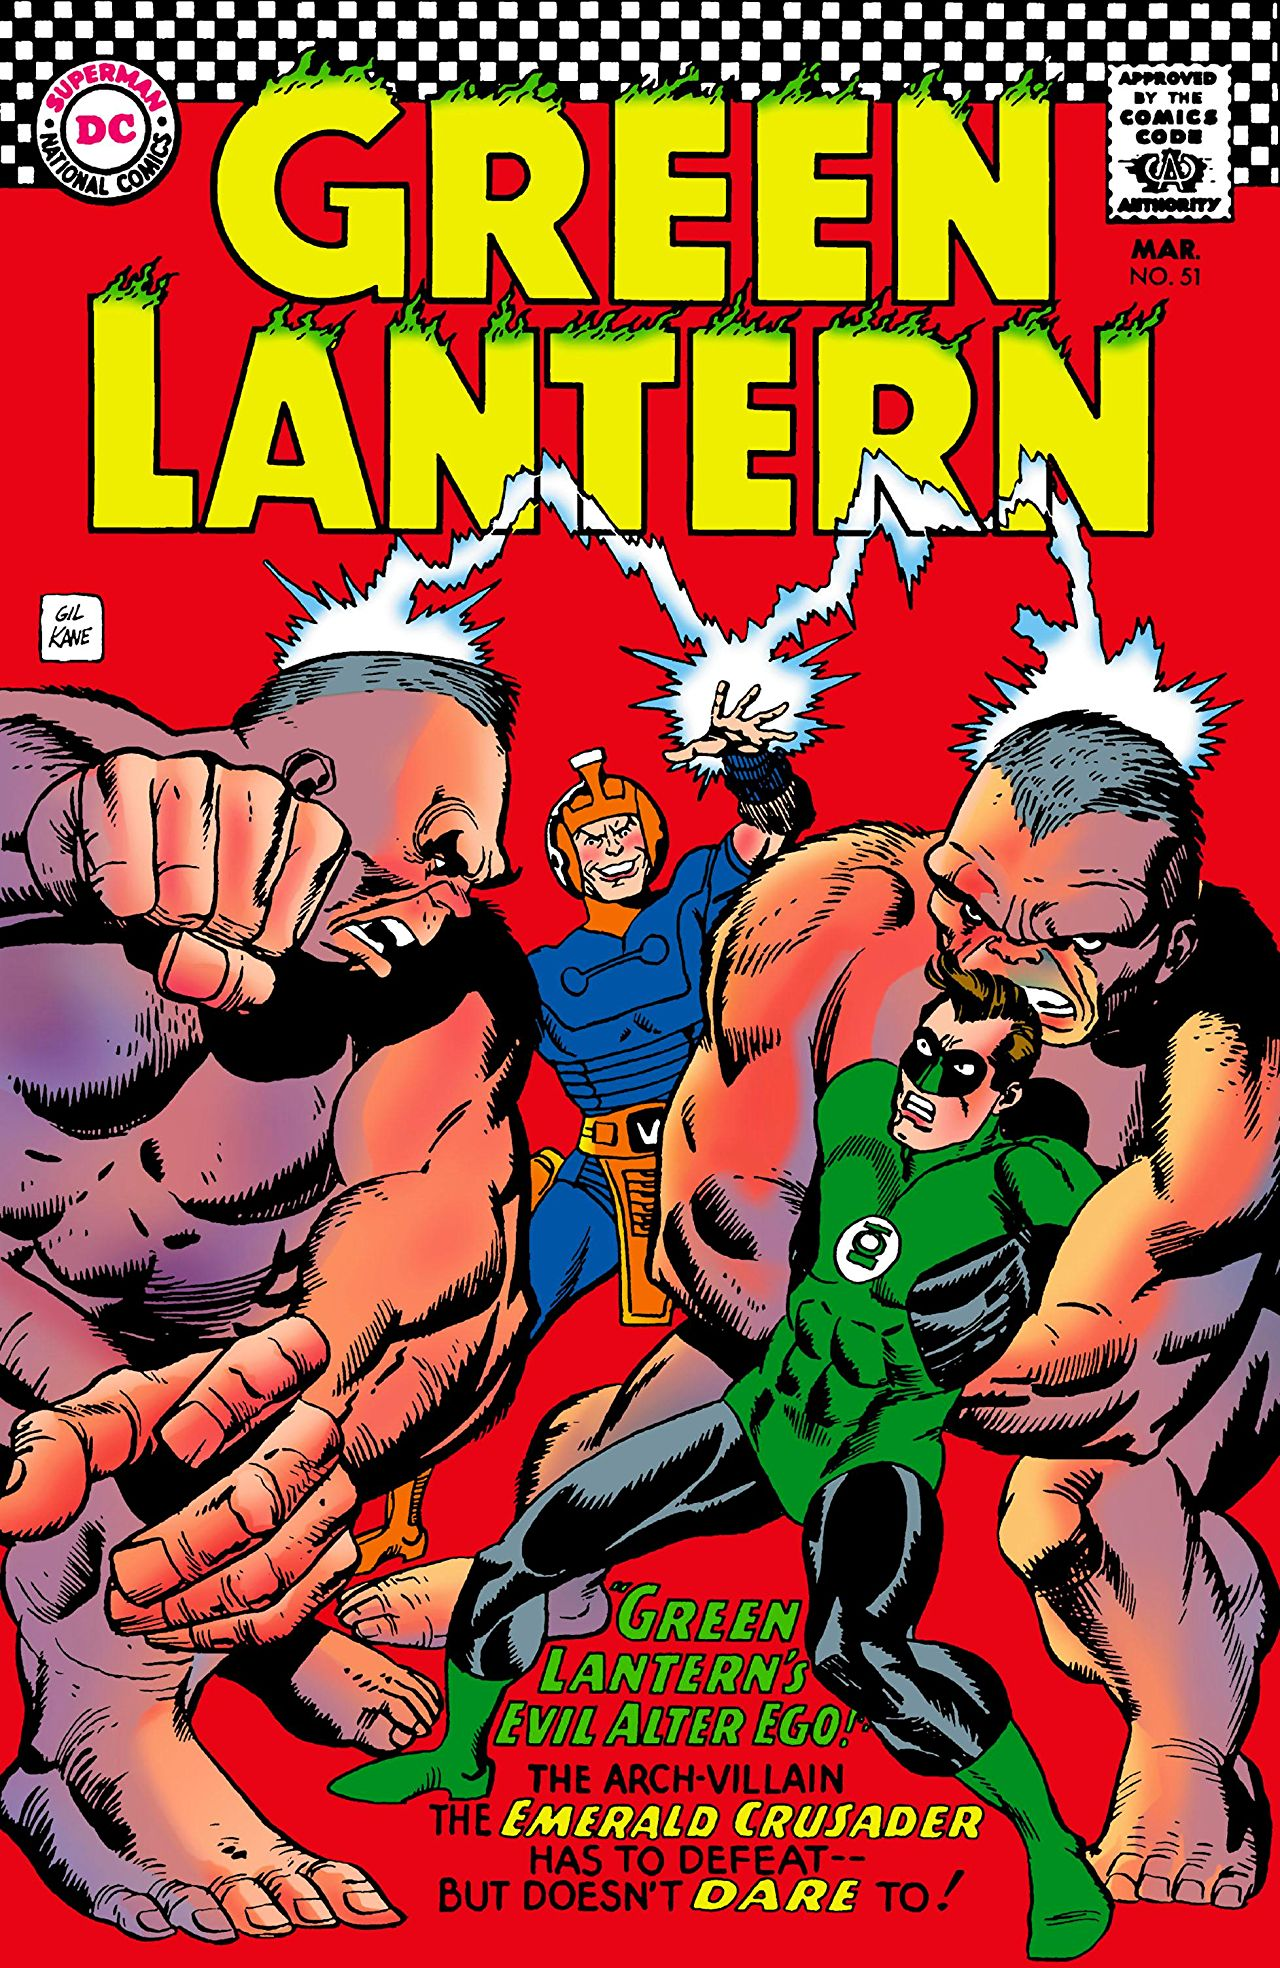 Green Lantern Vol. 2 51